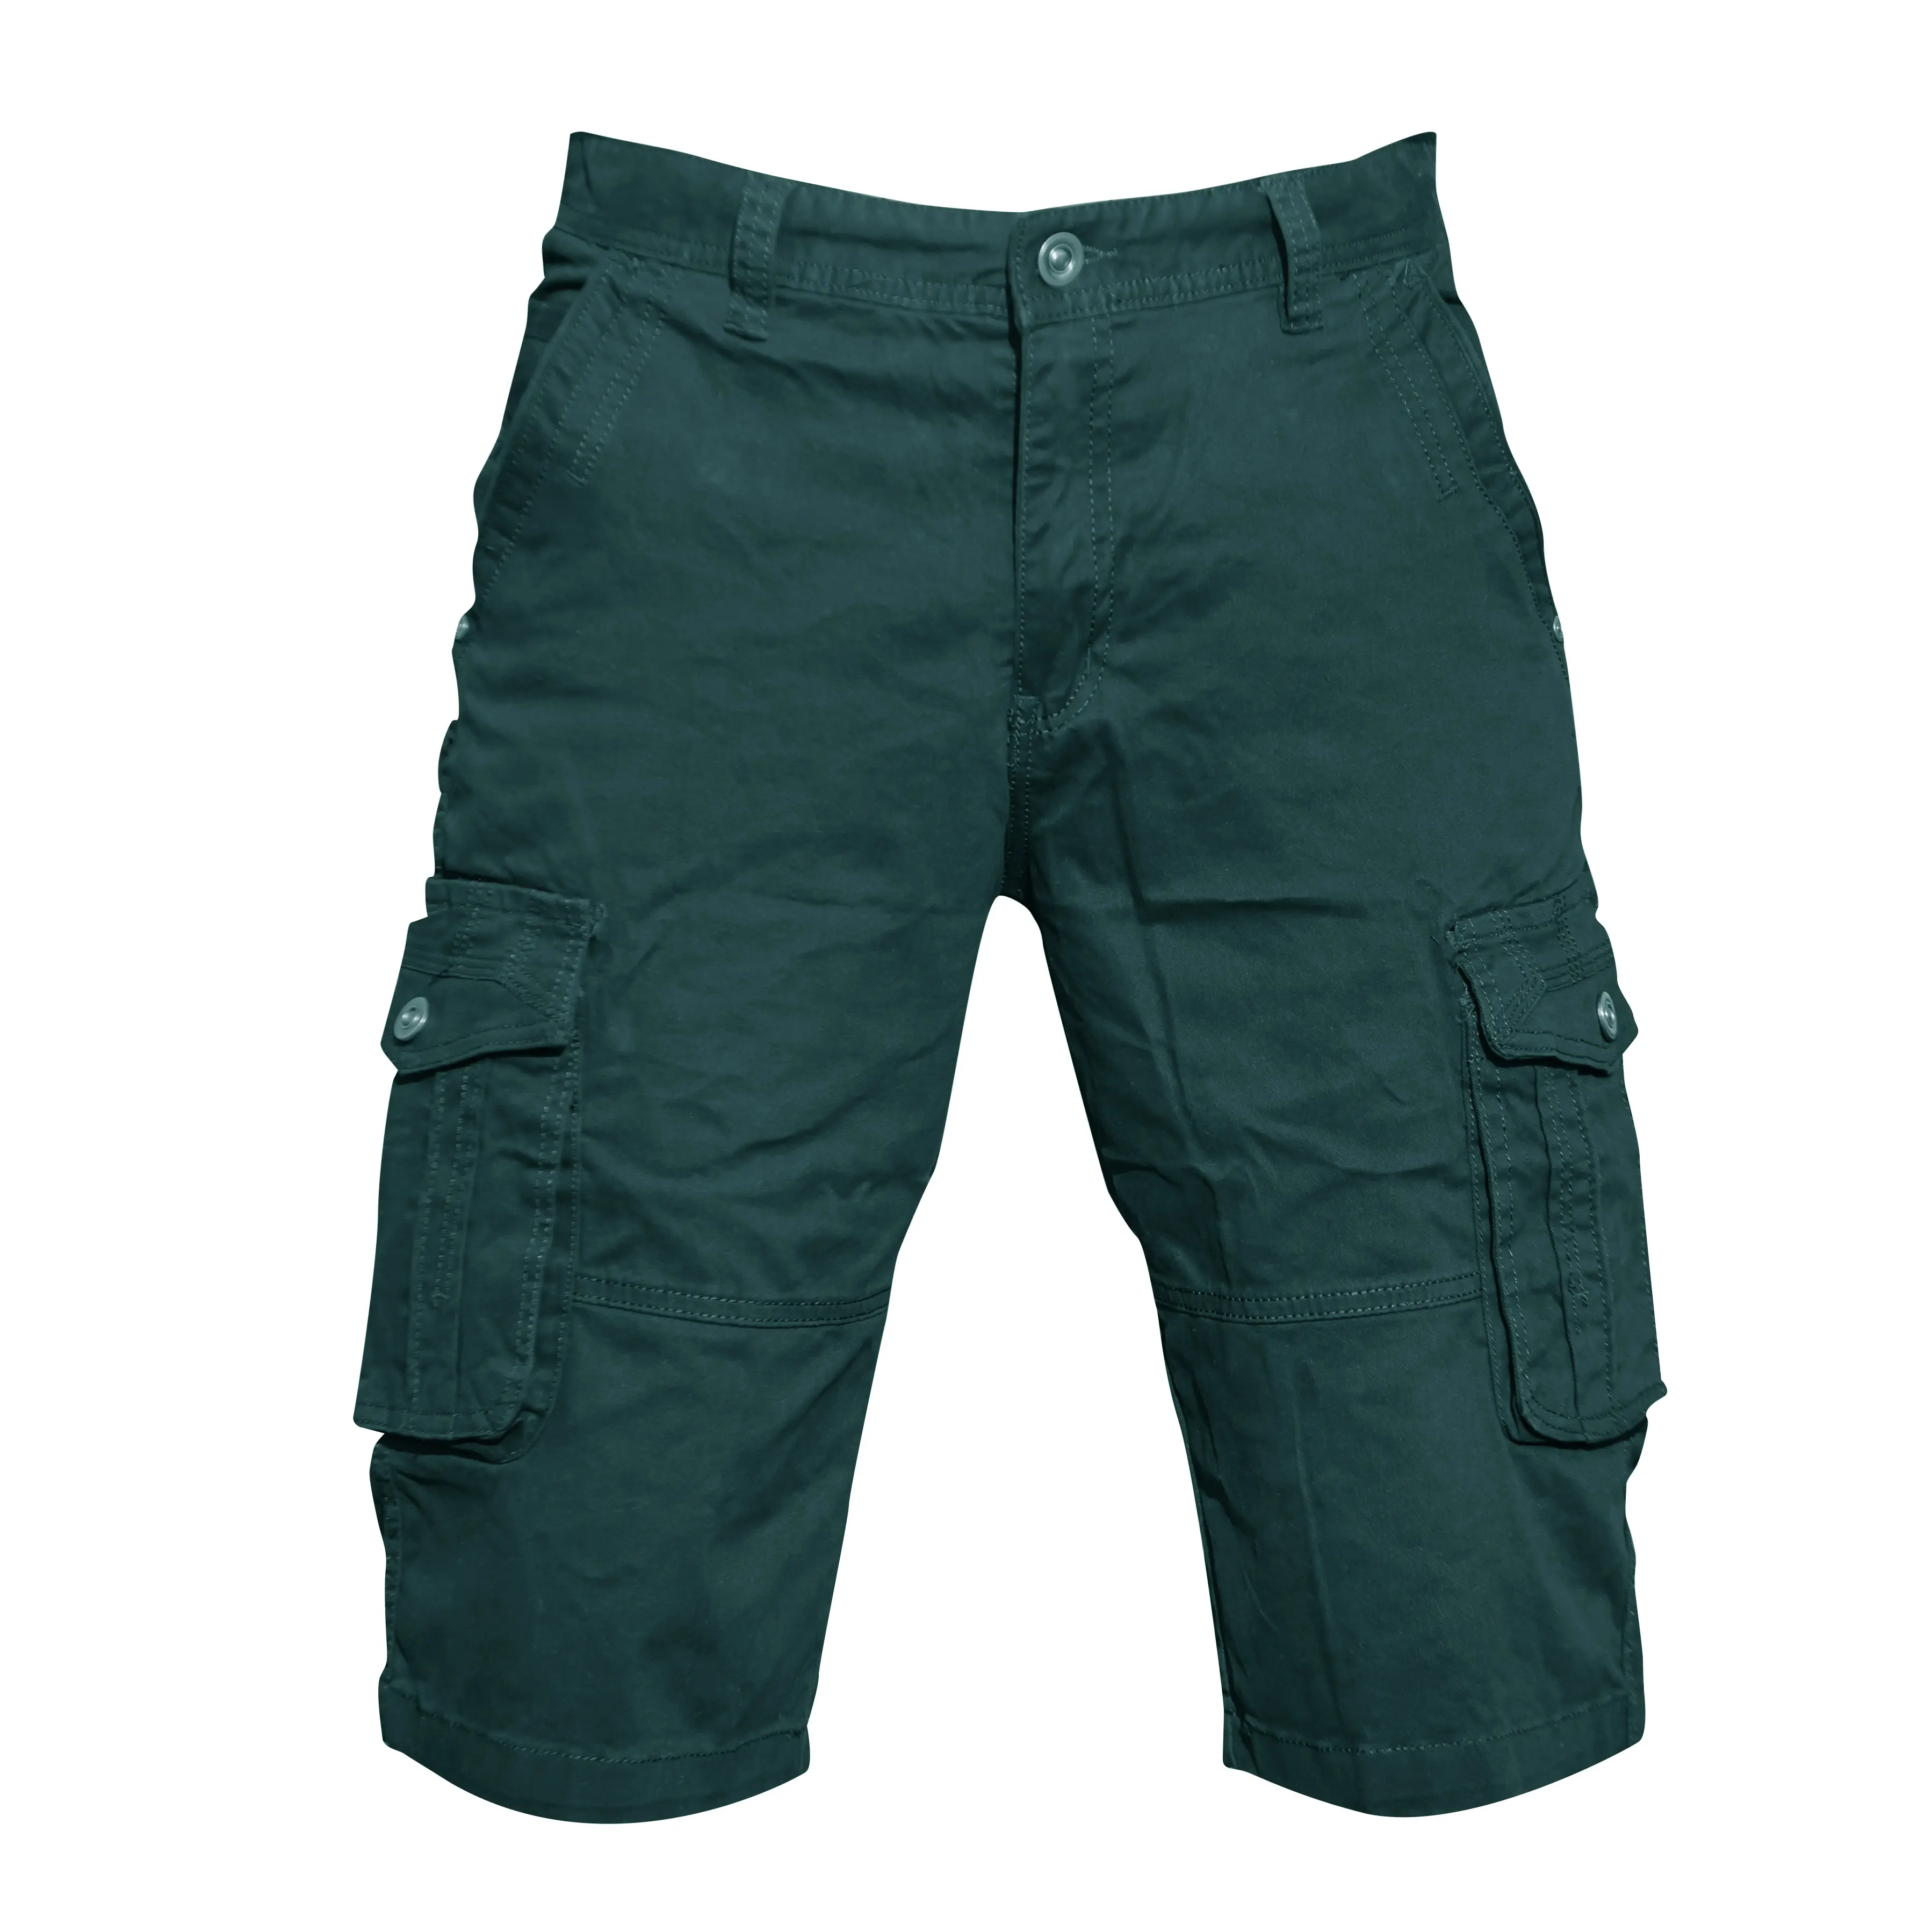 गर्म बिक्री लुभावनी कम कीमत सामरिक बहु जेब विशेष बल प्रशिक्षण कार्गो पैंट प्लस आकार स्पैन्डेक्स एंटी यूव कार्गो पैंट